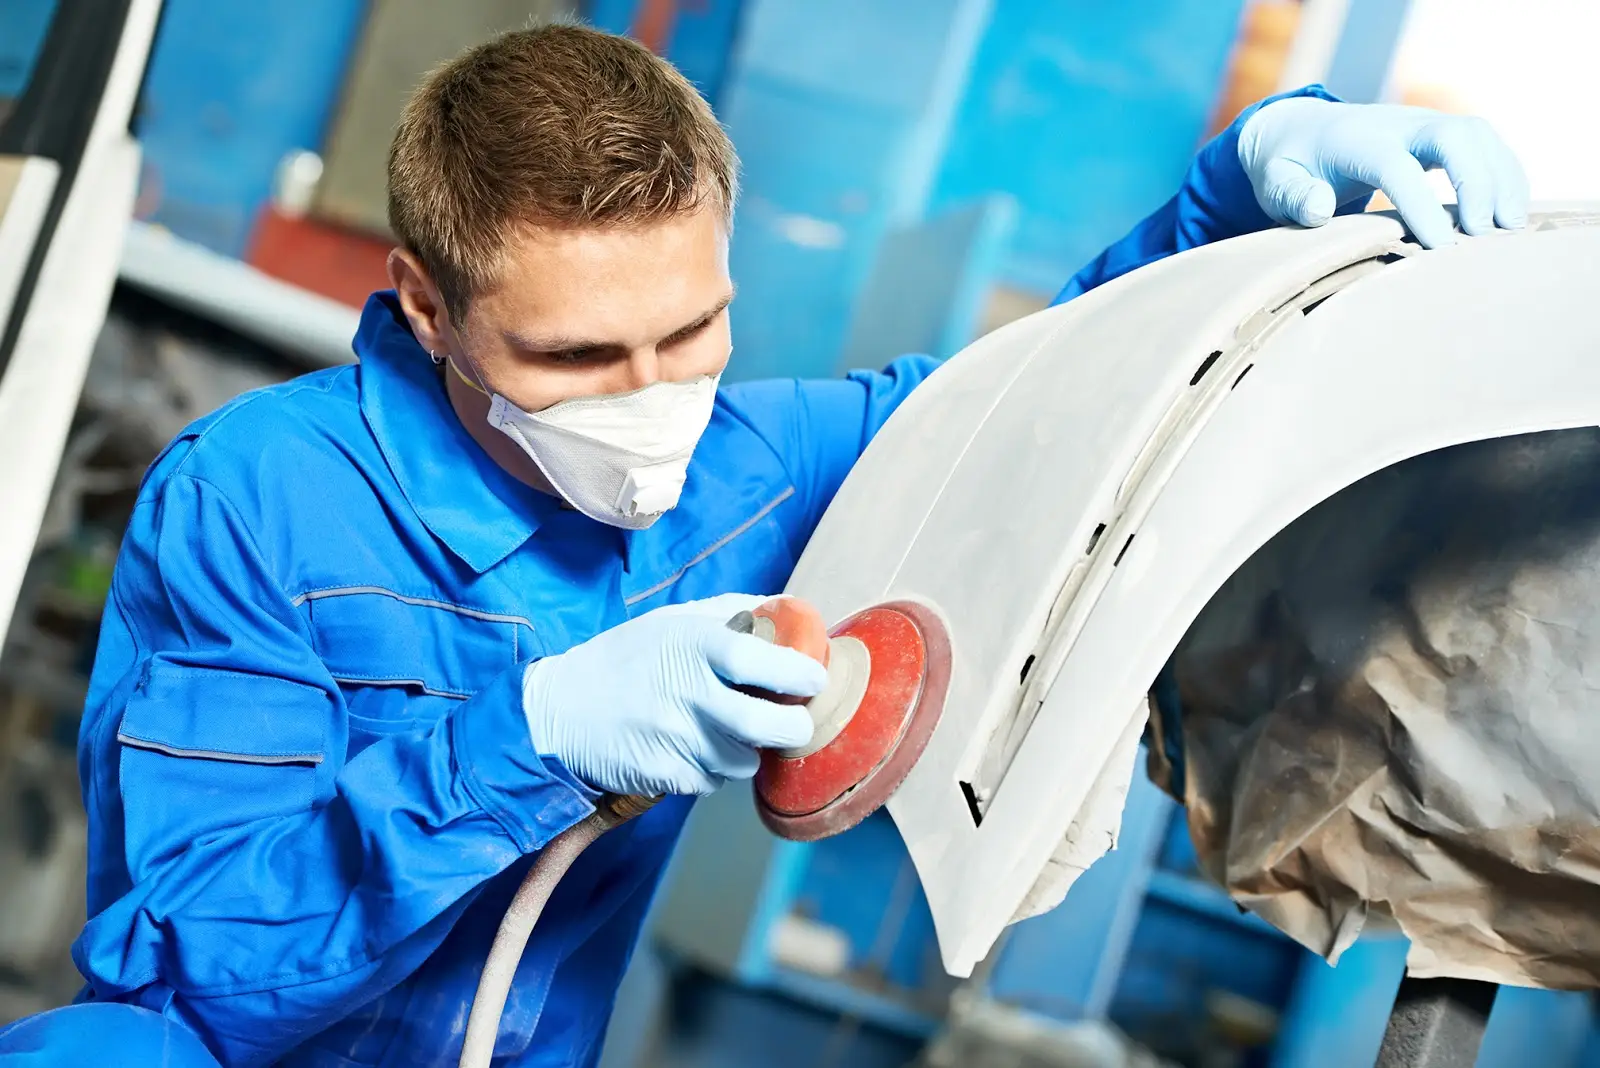 a person in a blue uniform polishing a car